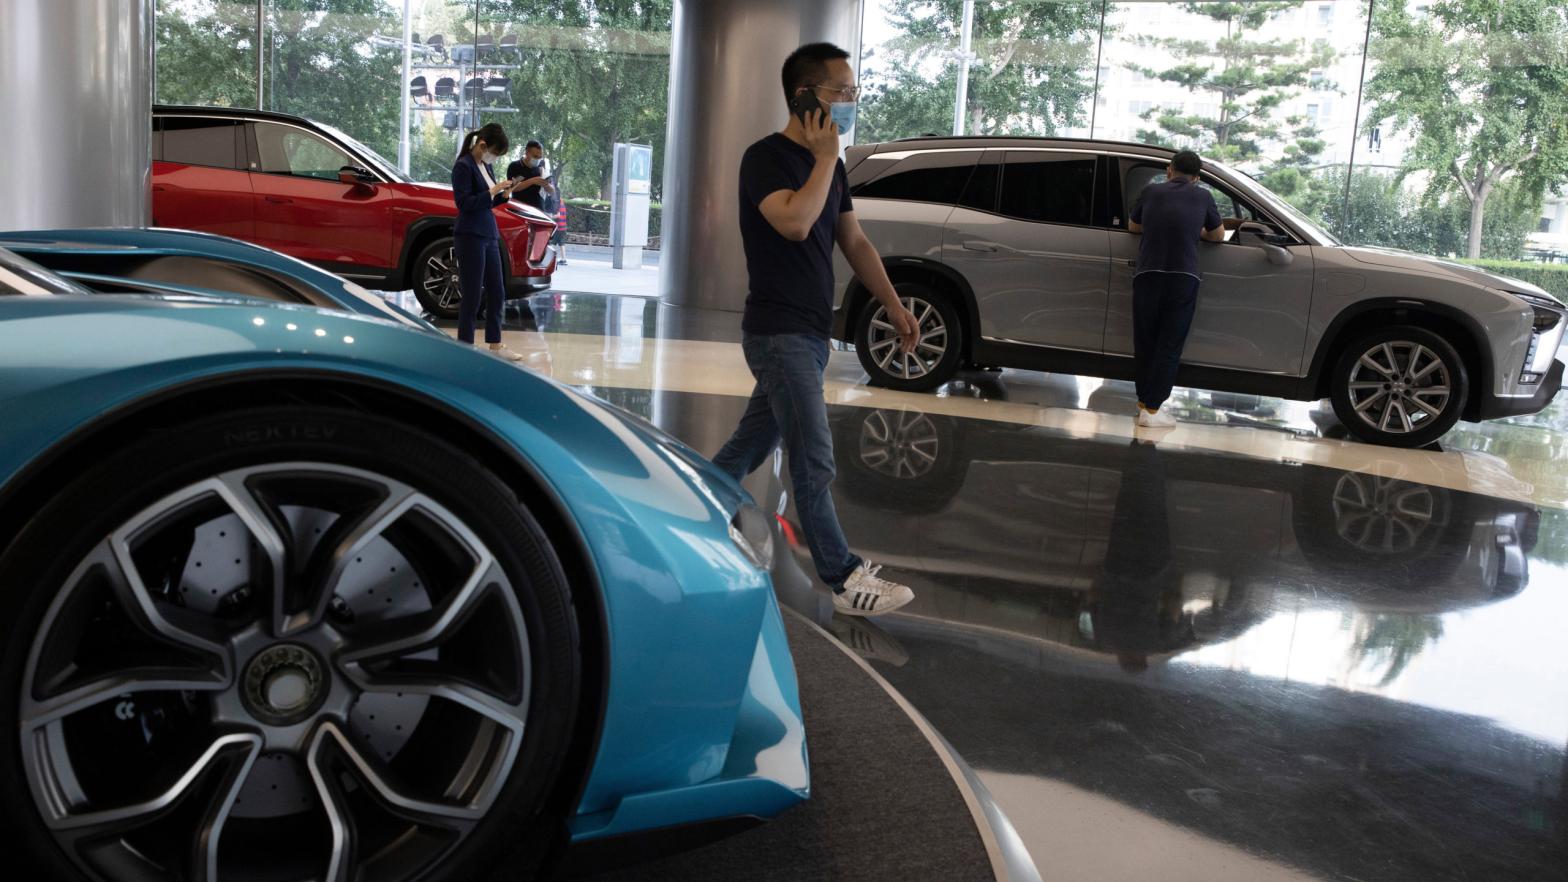 Visitors look at vehicles at the NIO flagship store in Beijing on Thursday, Aug. 20, 2020. (Photo: Ng Han Guan, AP)